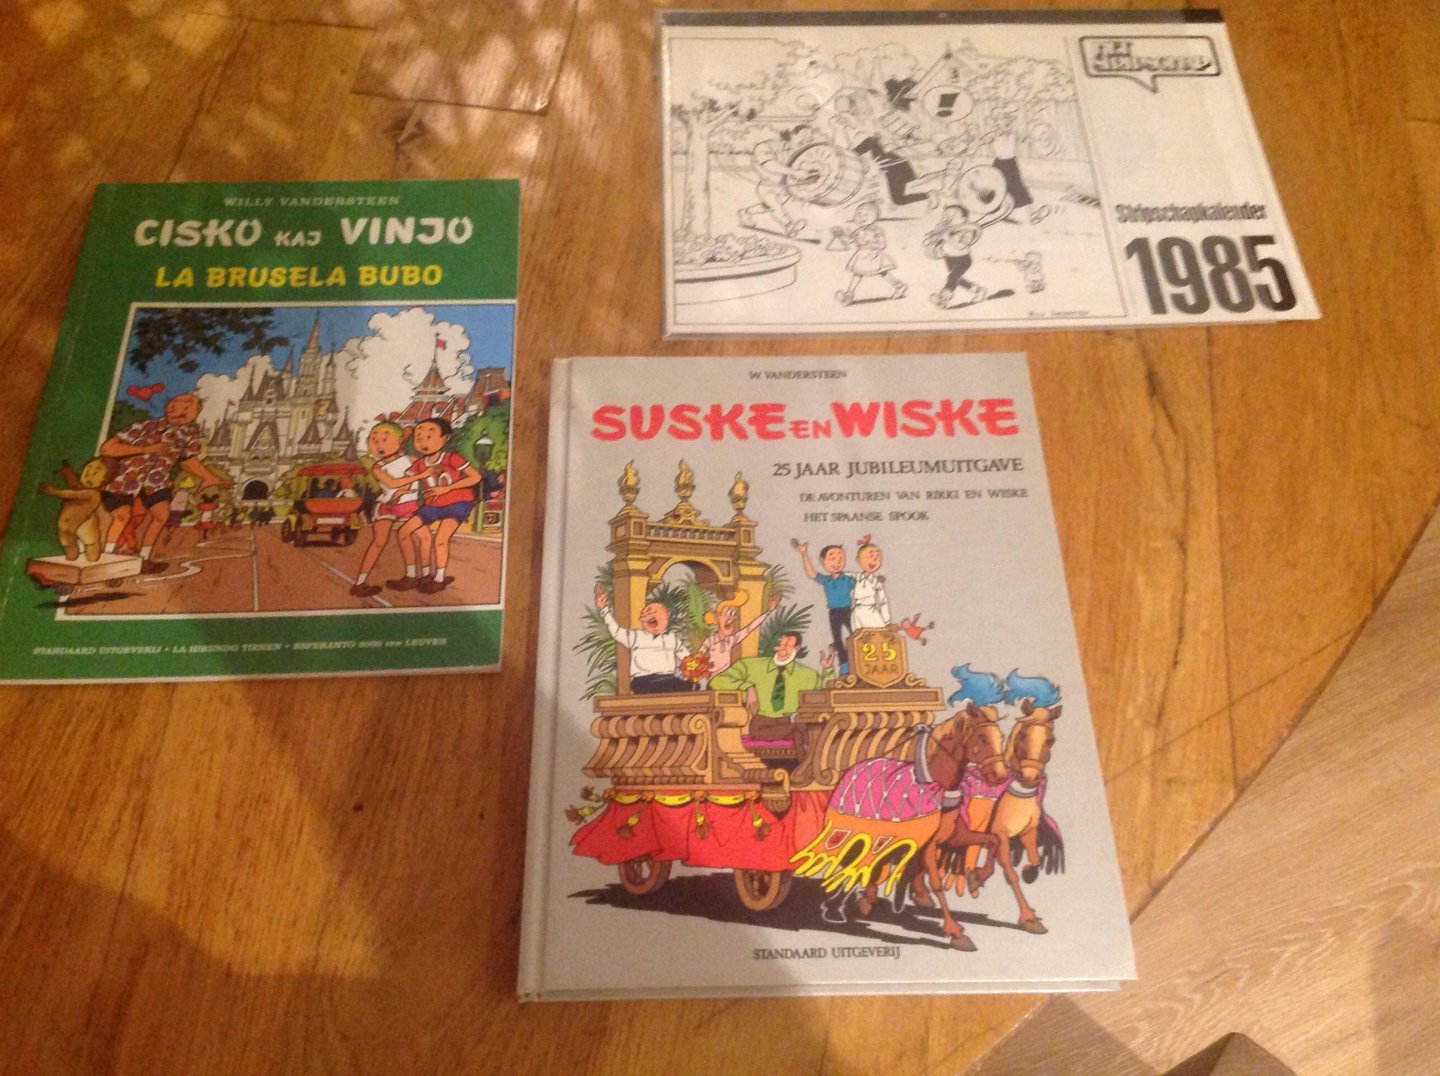 Vandersteen, W. - Suske en Wiske 25 jaar jubileumuitgave / druk 1.  Met twee extra's